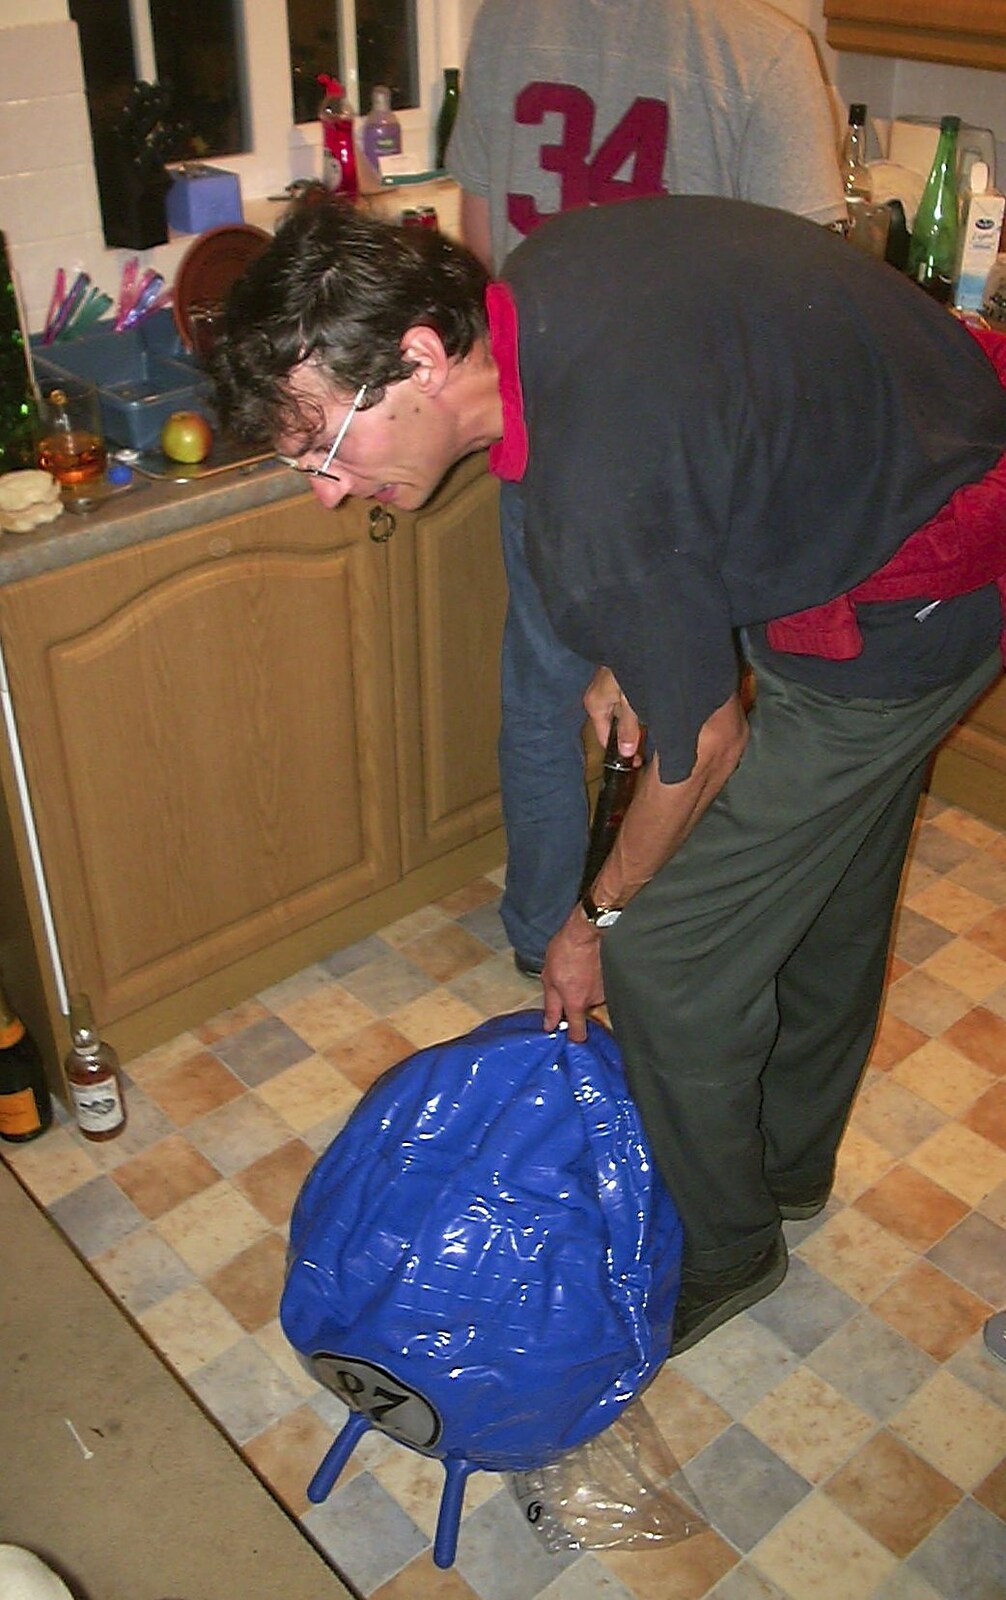 The BSCC in Debenham, and Bill's Housewarming Barbie, Yaxley, Suffolk - 31st July 2004: A space hopper is prepared